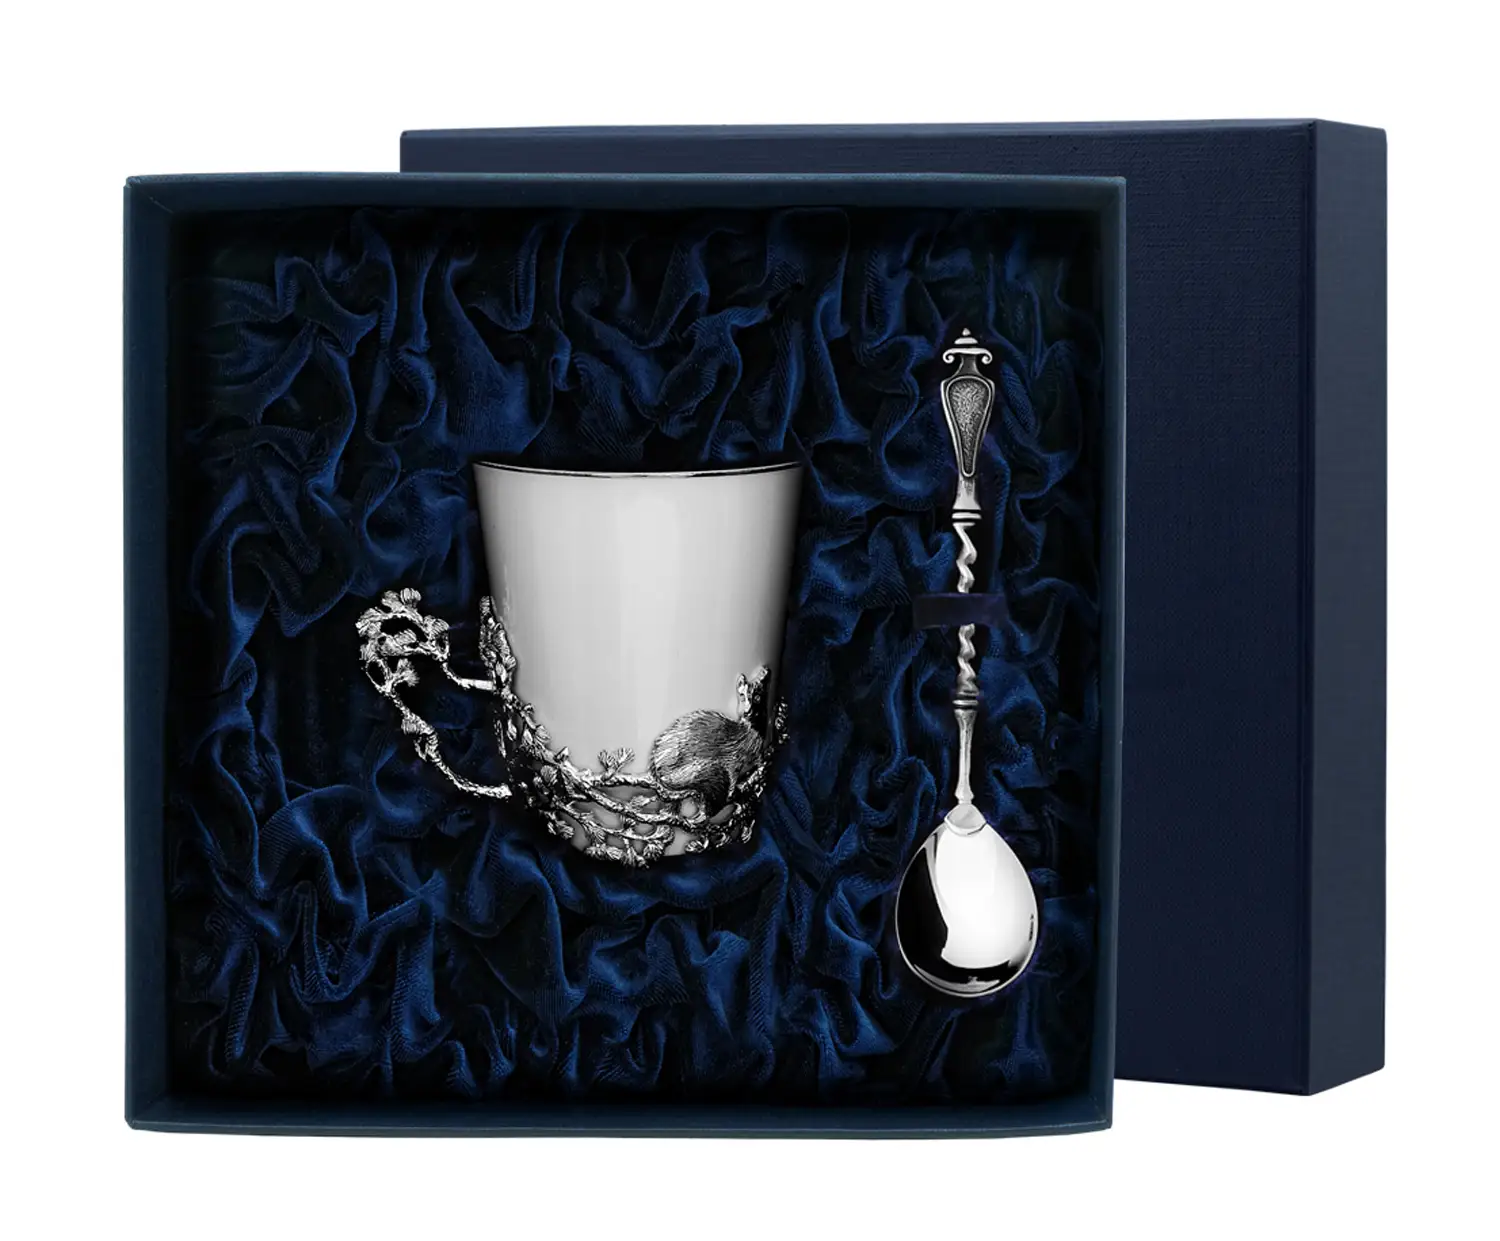 Набор чайная чашка Куница: ложка, чашка (Серебро 925) набор чайная чашка натюрморт ложка чашка серебро 925